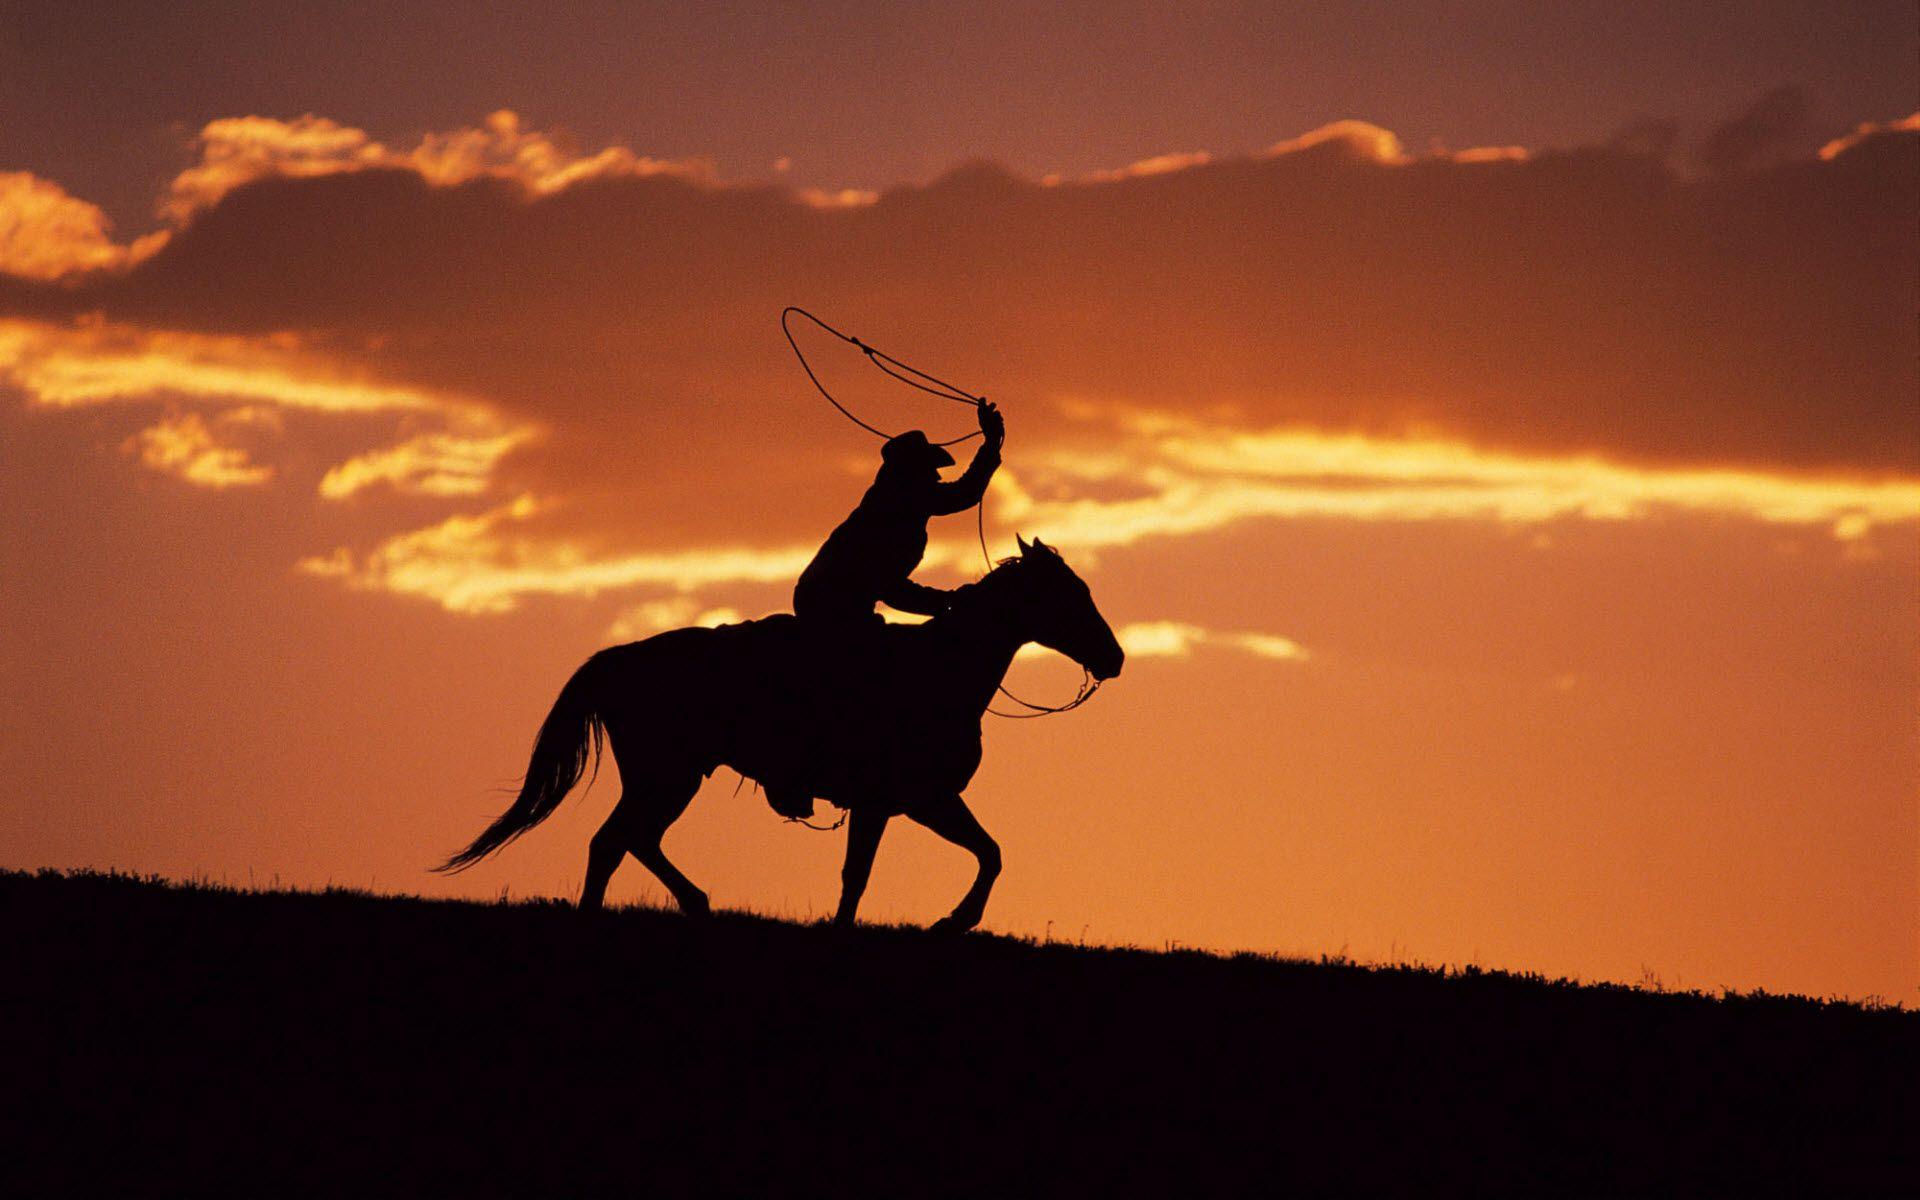 Horse Riding At Sunset. Desktop Wallpaper. Sunrise Sunset. Horse